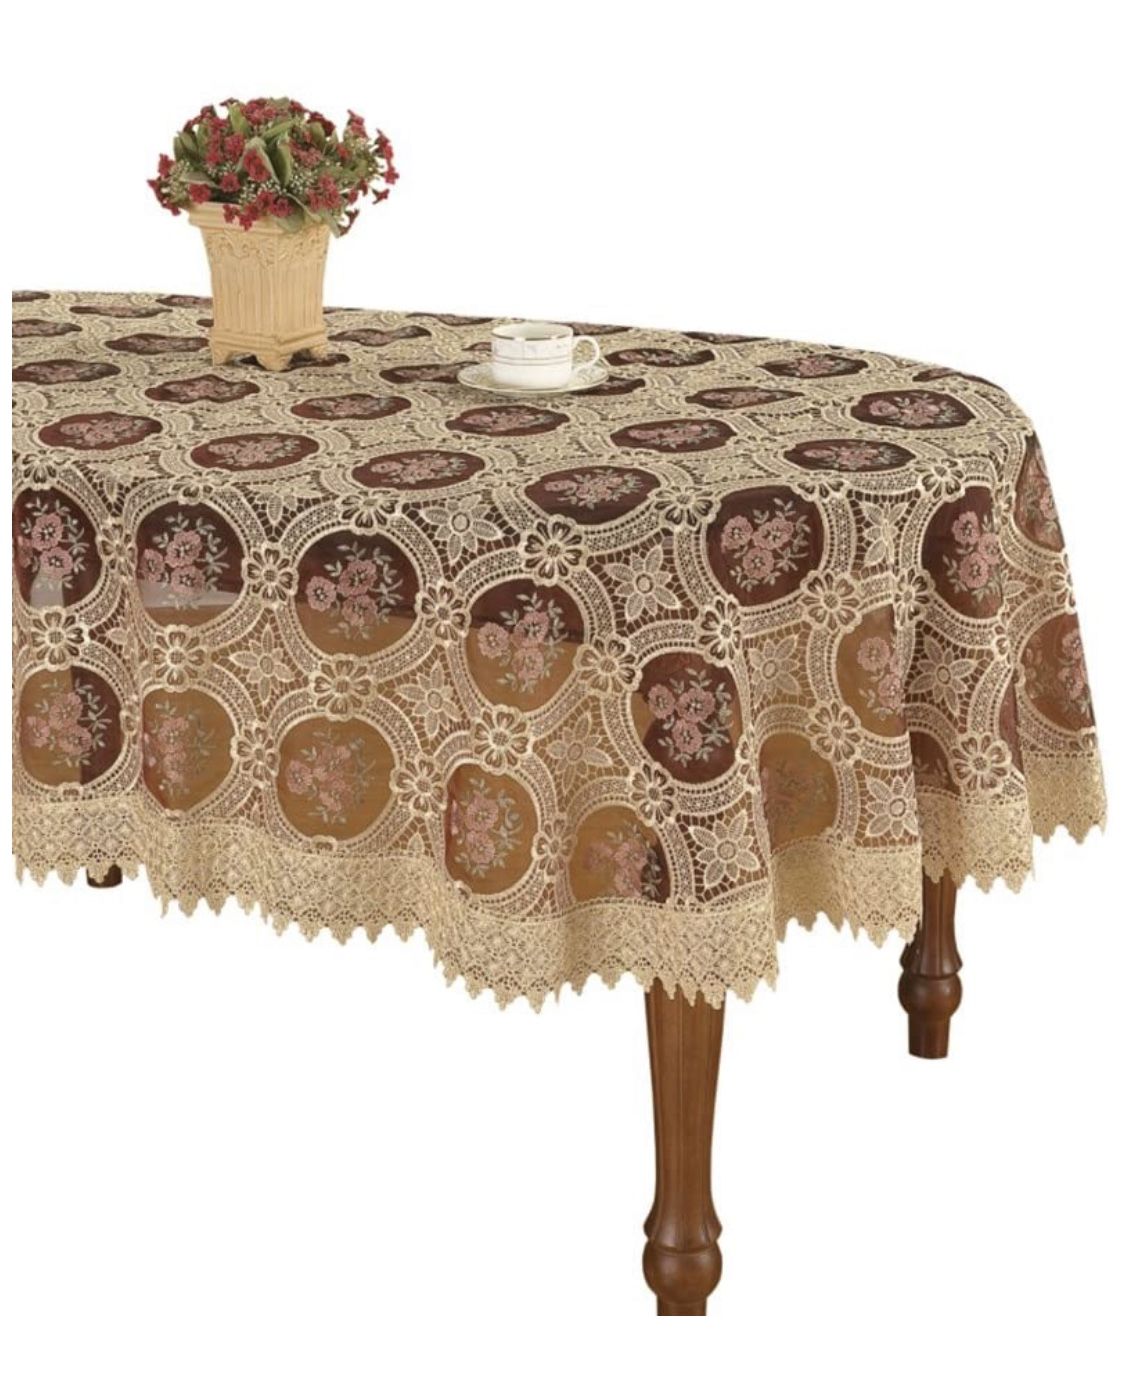 Oval tablecloth